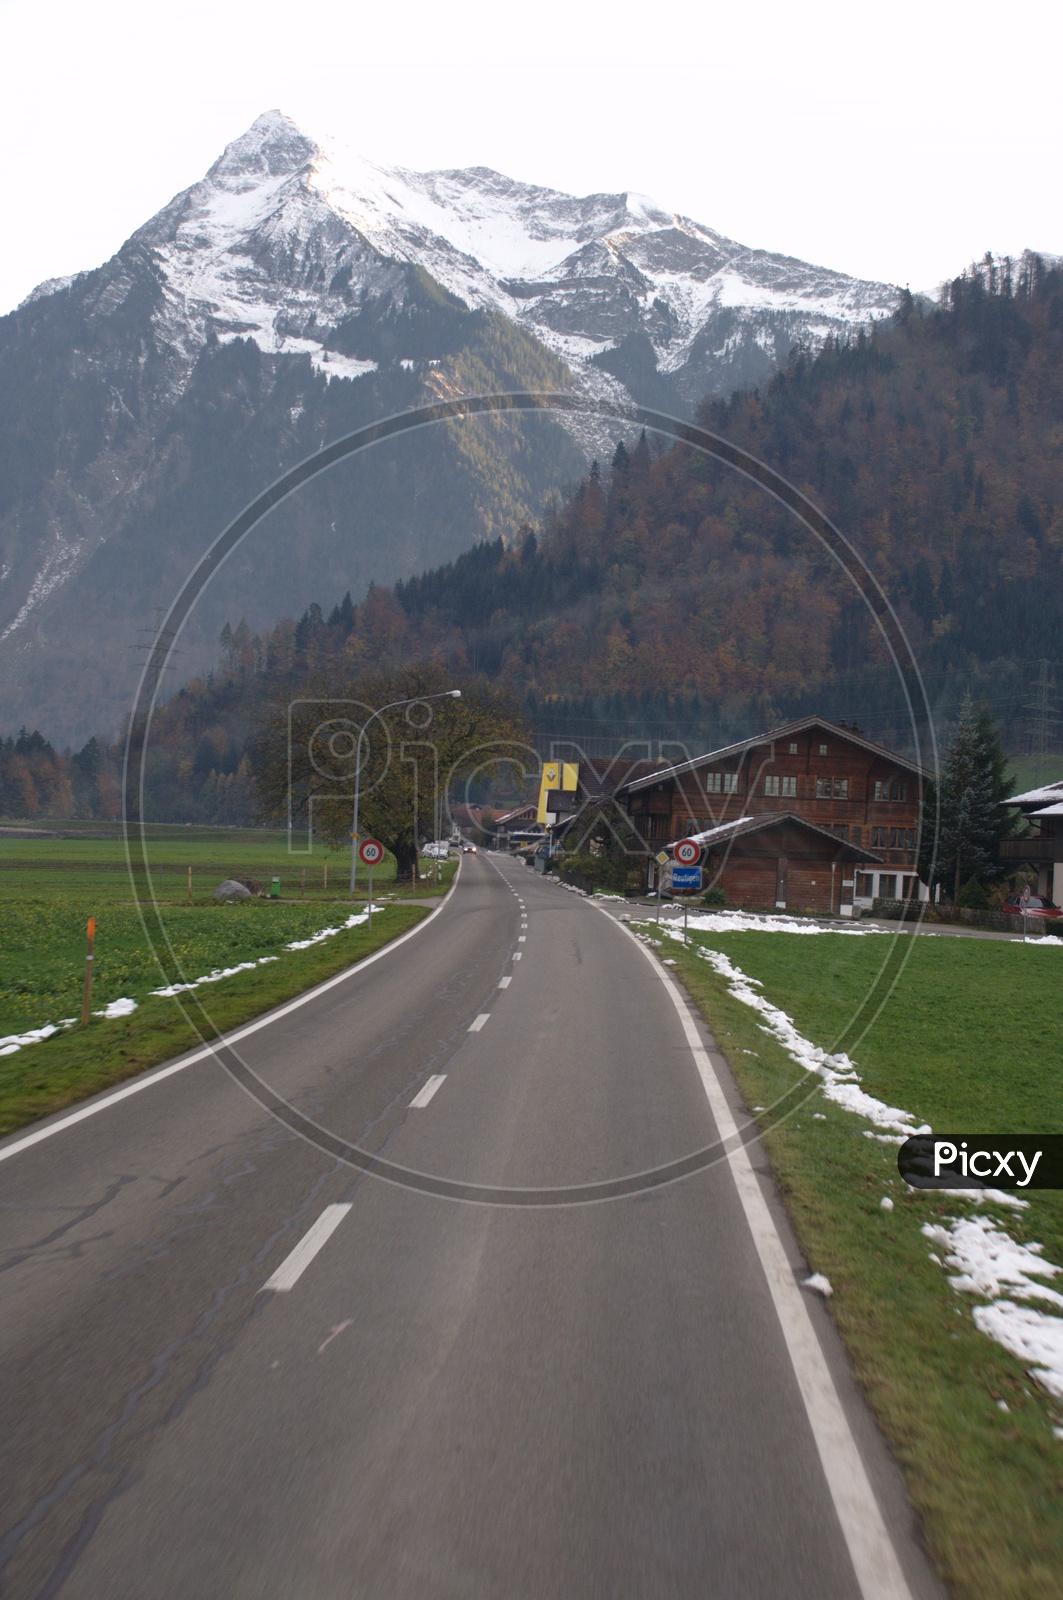 Roadway through the Green meadow alongside the Swiss Alps